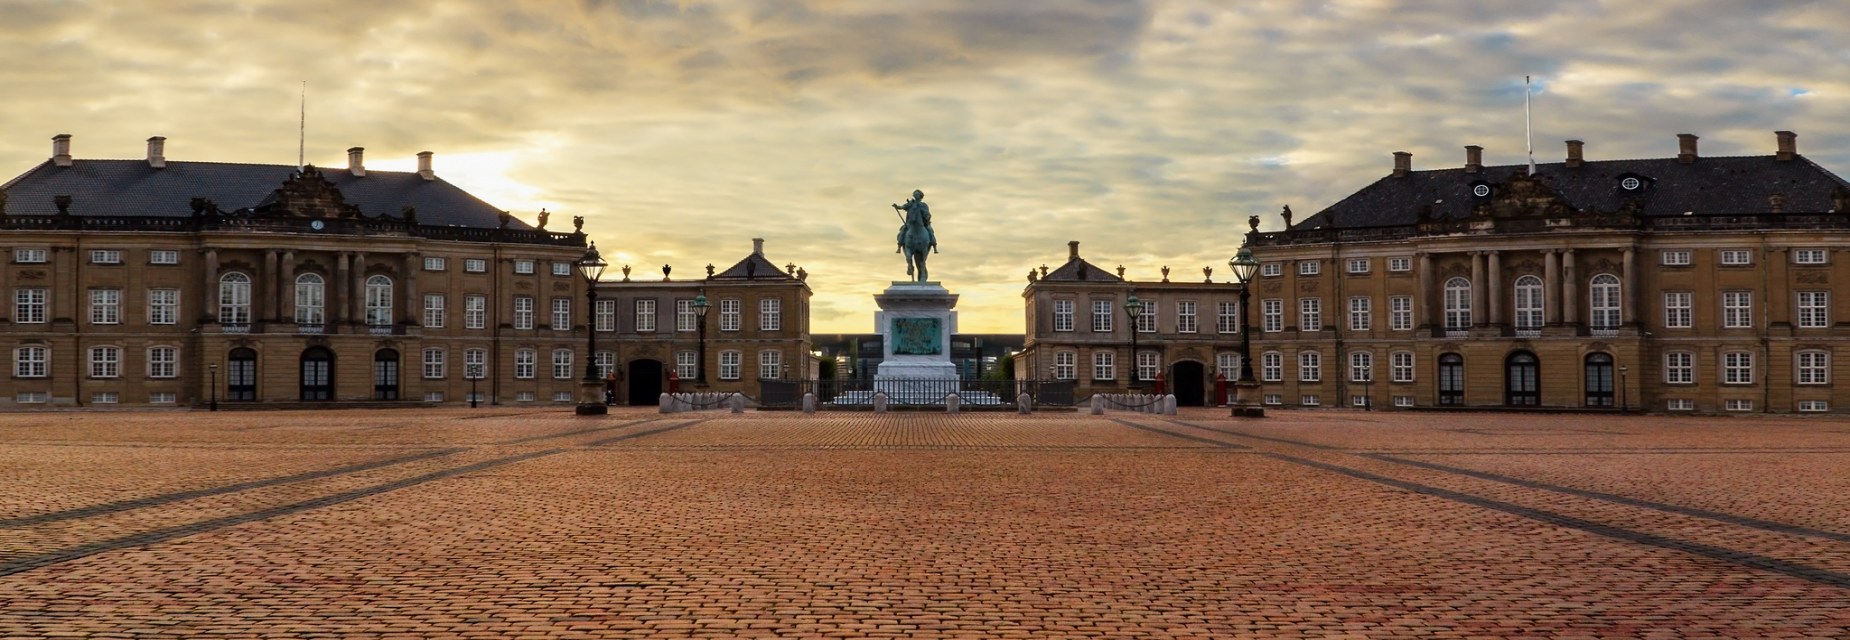 Amalienborg-Palace-in-Denmark-HD-Photo-7